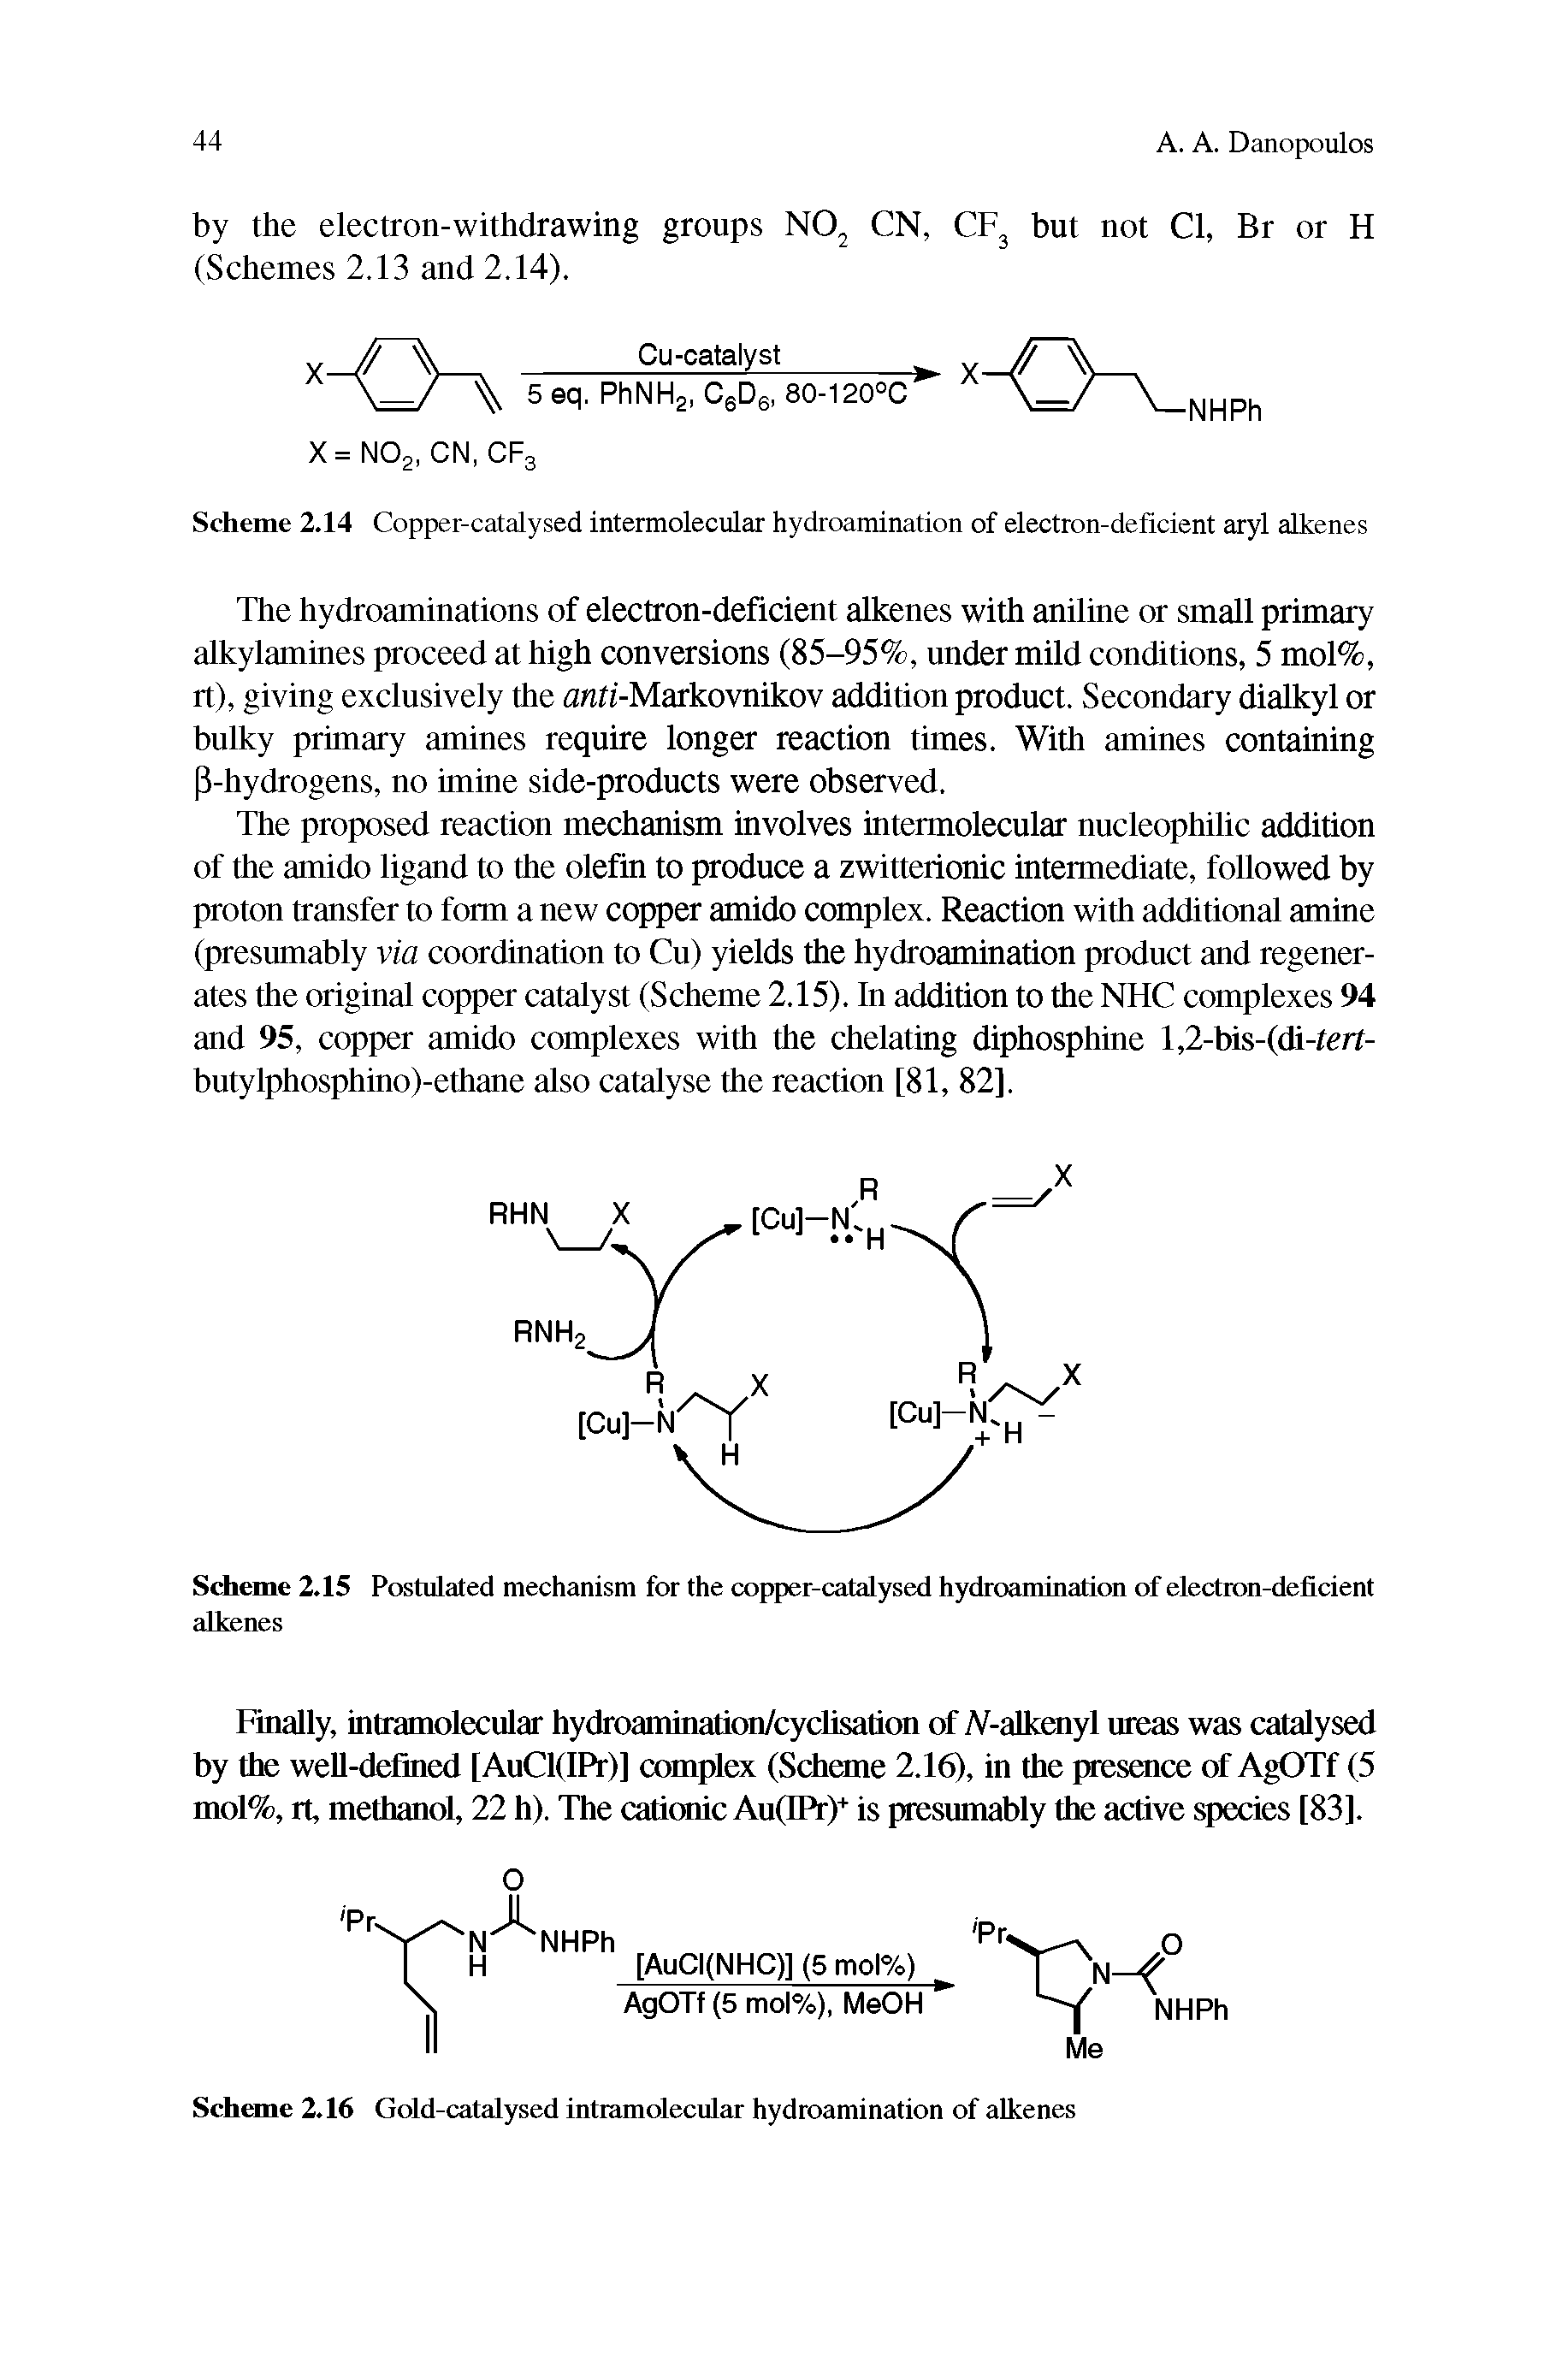 Scheme 2.14 Copper-catalysed intermolecular hydroamination of electron-deficient aryl alkenes...